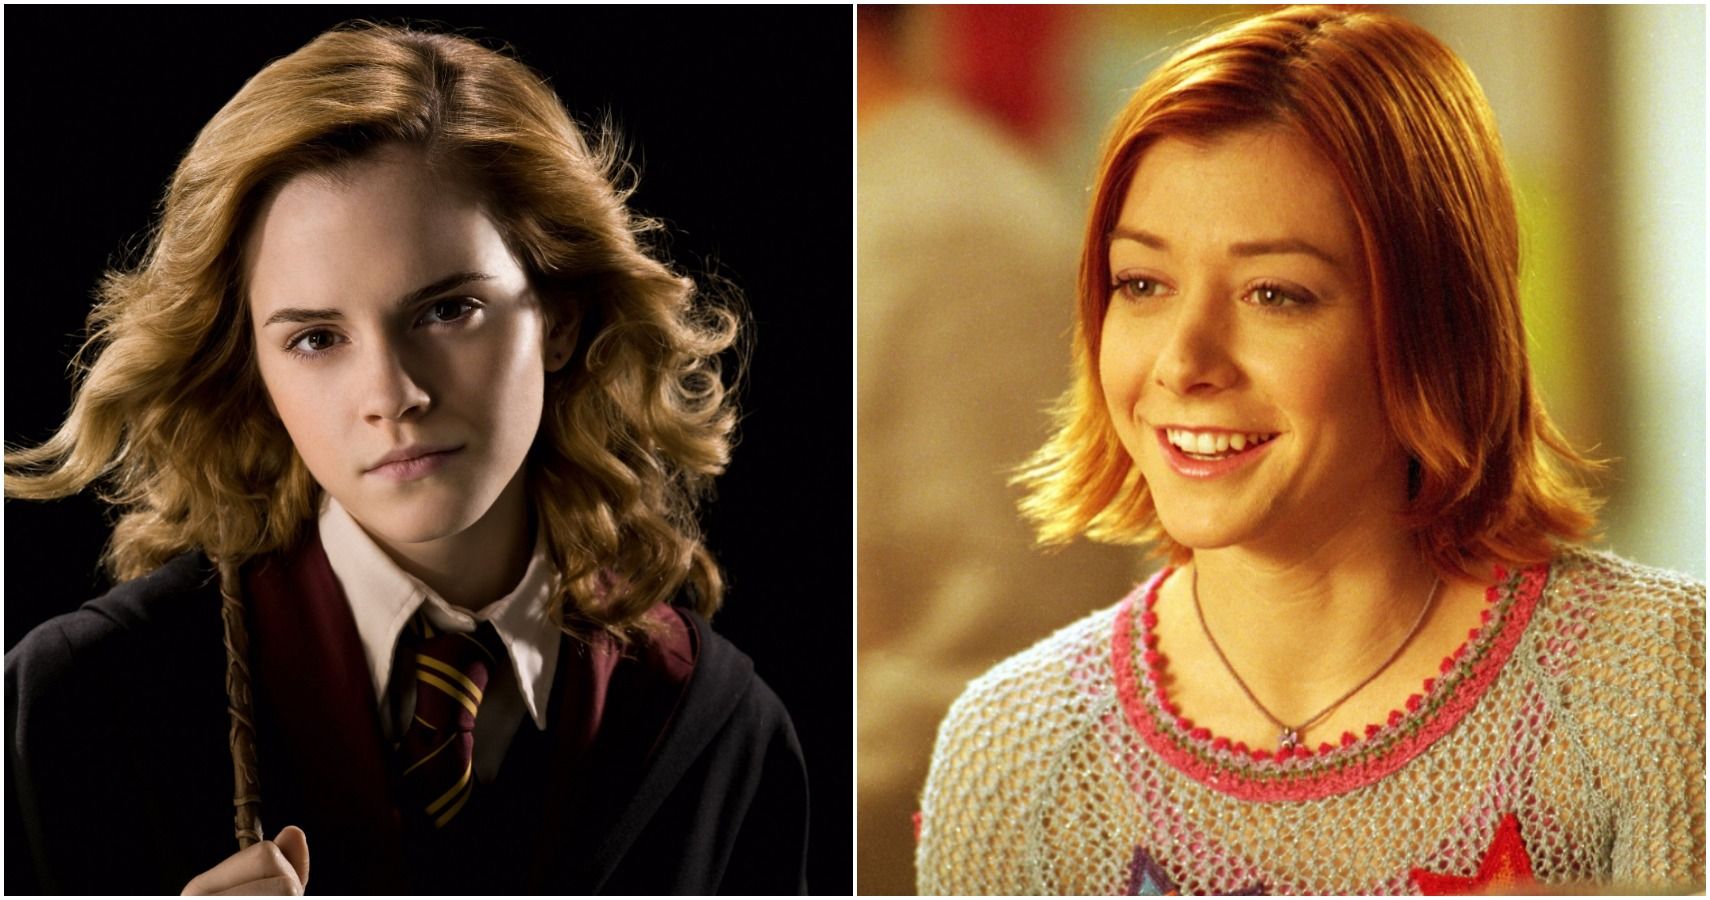 Harry Potter's Hermione Granger and Buffy's Willow Rosenberg